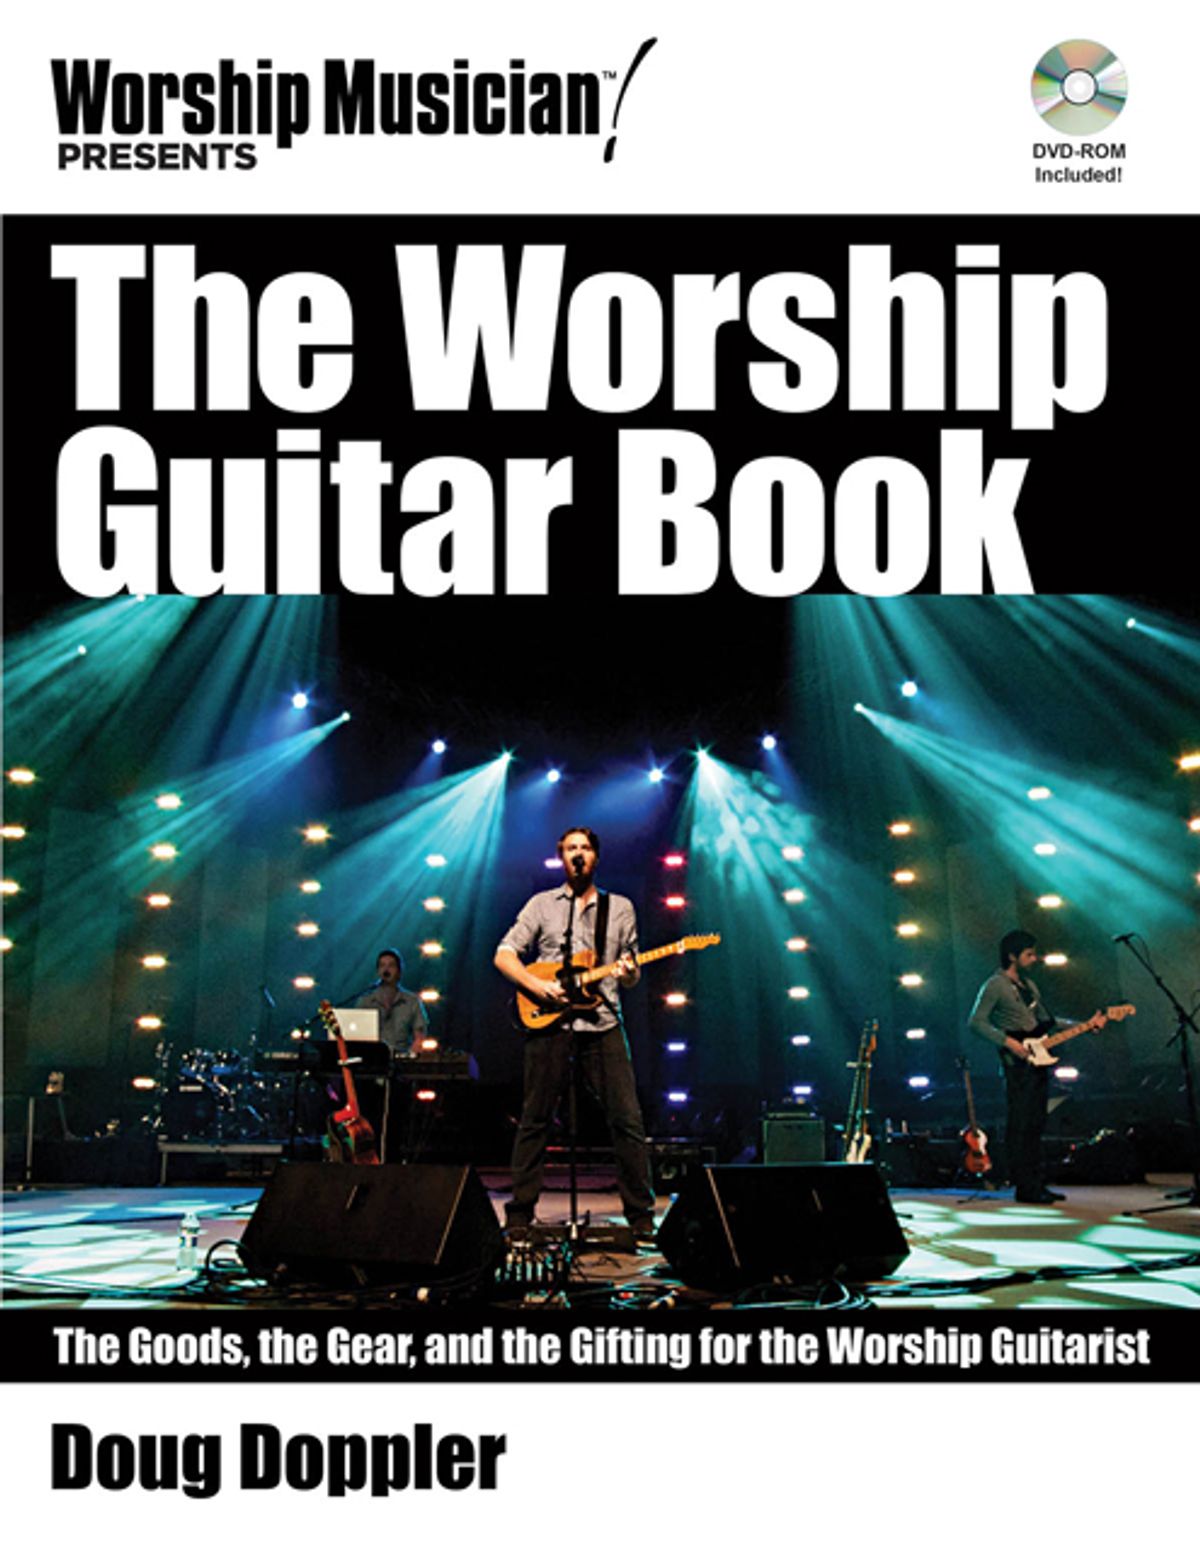 Hal Leonard Announces "The Worship Guitar Book"